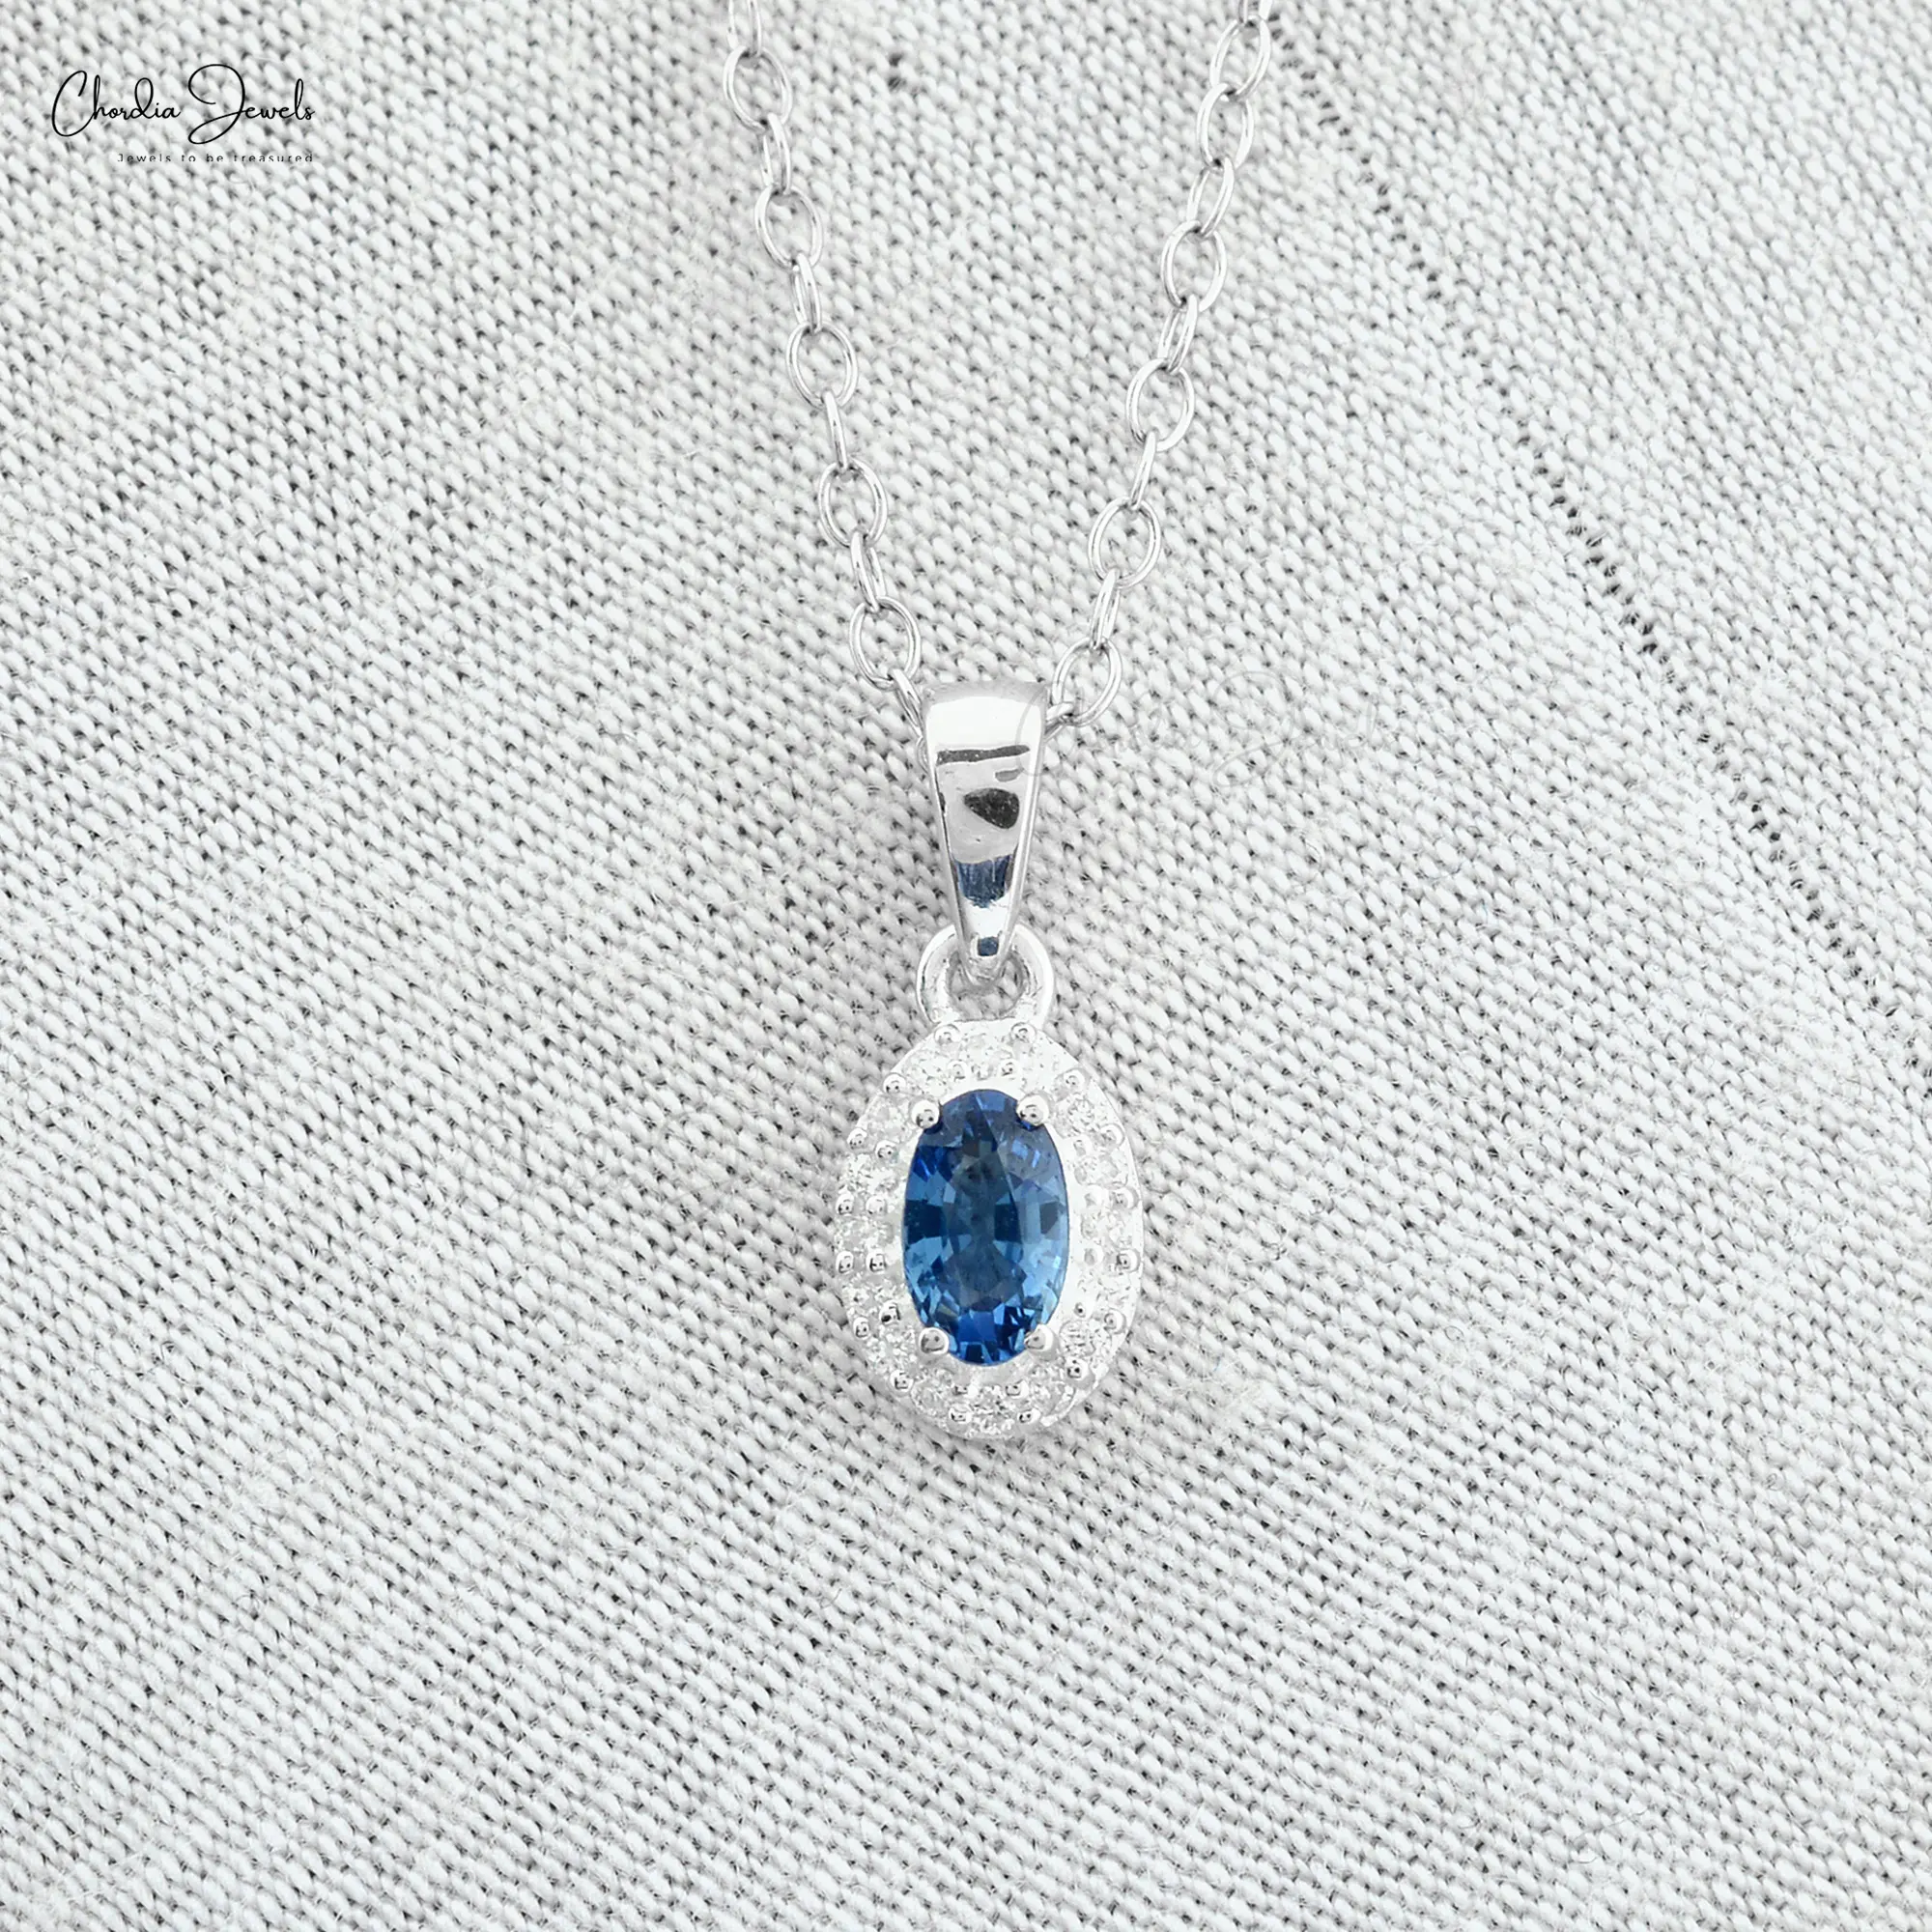 Wholesale Price Genuine Blue Sapphire Pendant 14k Solid White Gold Diamond Halo Pendant 5x3mm Oval Gemstone Jewelry For Women